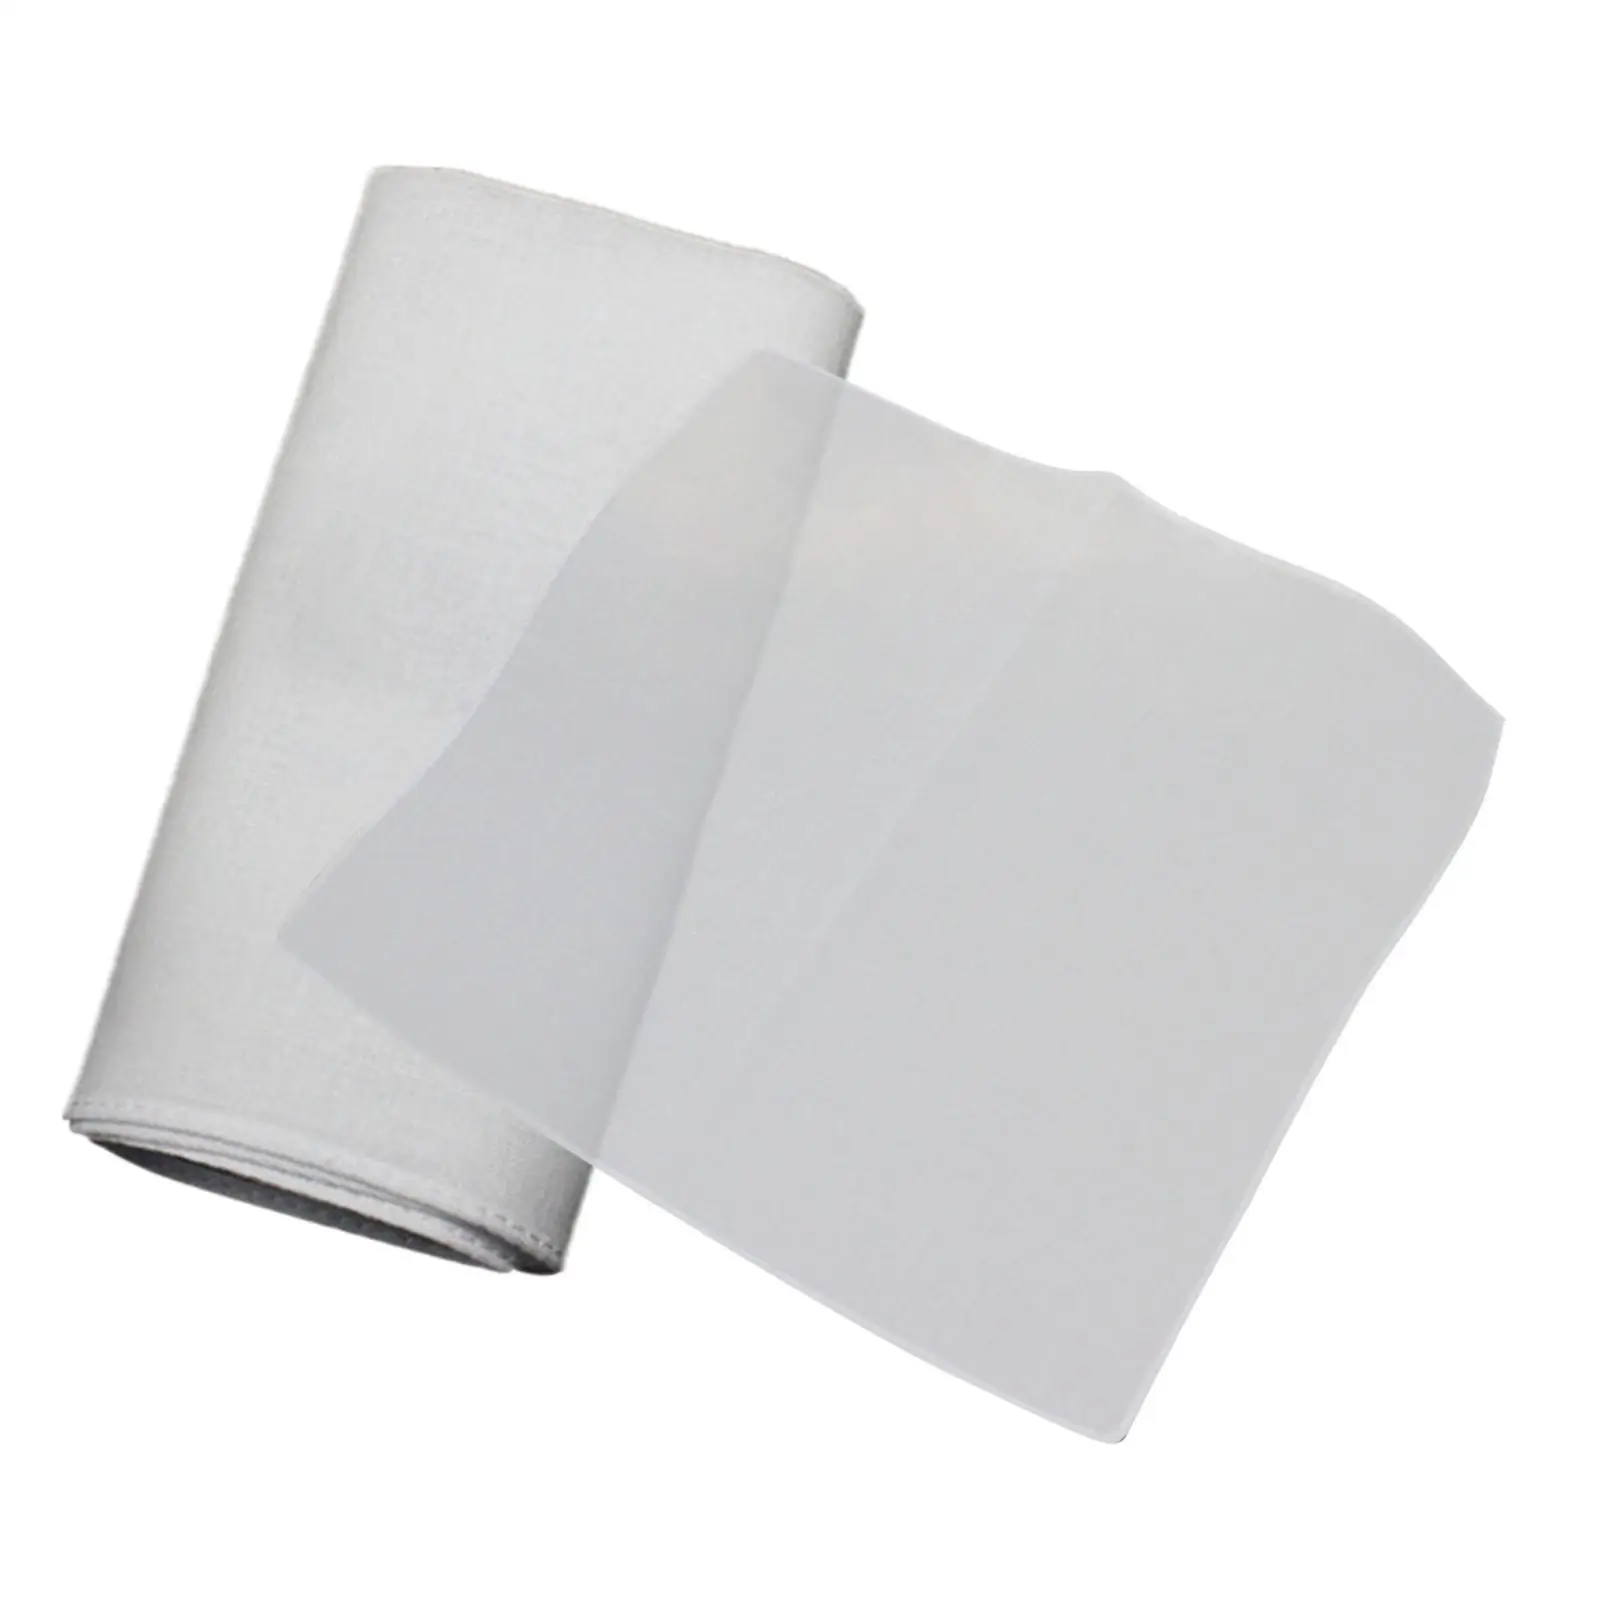 10Pcs Blank White Handkerchiefs for Men Women 42S Cotton 10 inch Soft Classic White Hankies for DIY Handmade Crafts Tie Dye